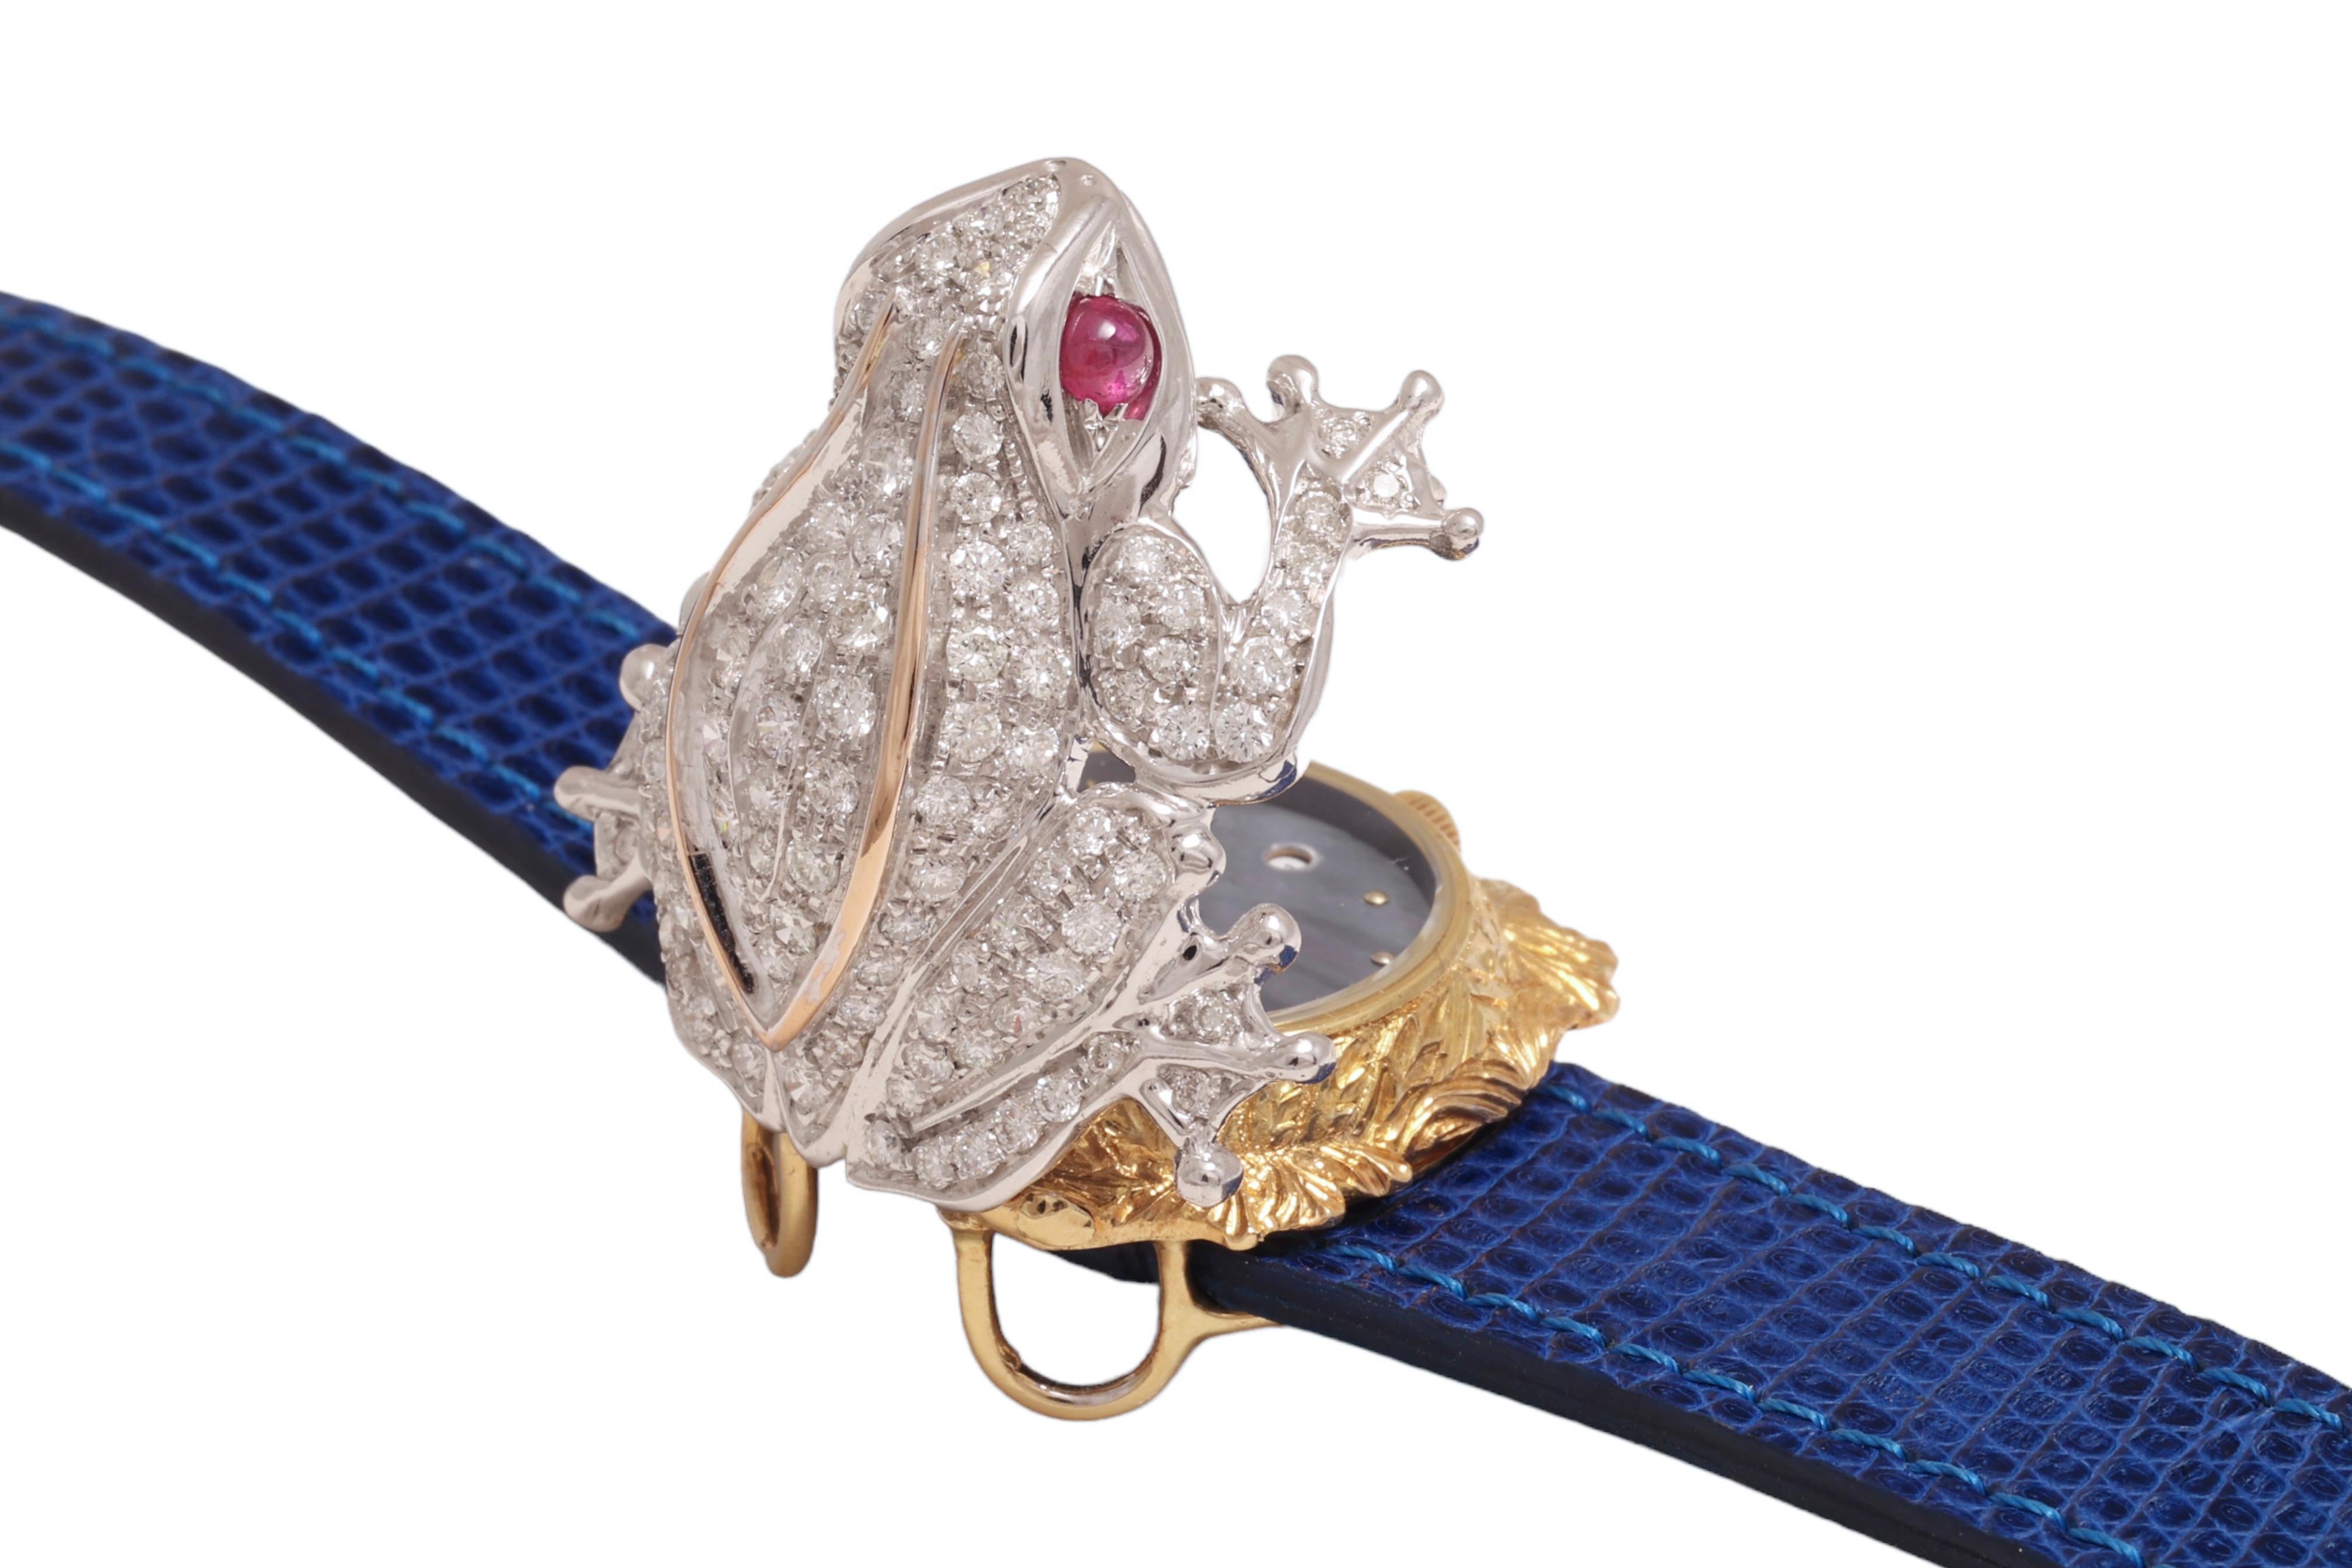 Zannetti Rana Scrigno Jewel Frog Wrist Watch / Bracelet, Diamonds & Ruby's In Excellent Condition For Sale In Antwerp, BE